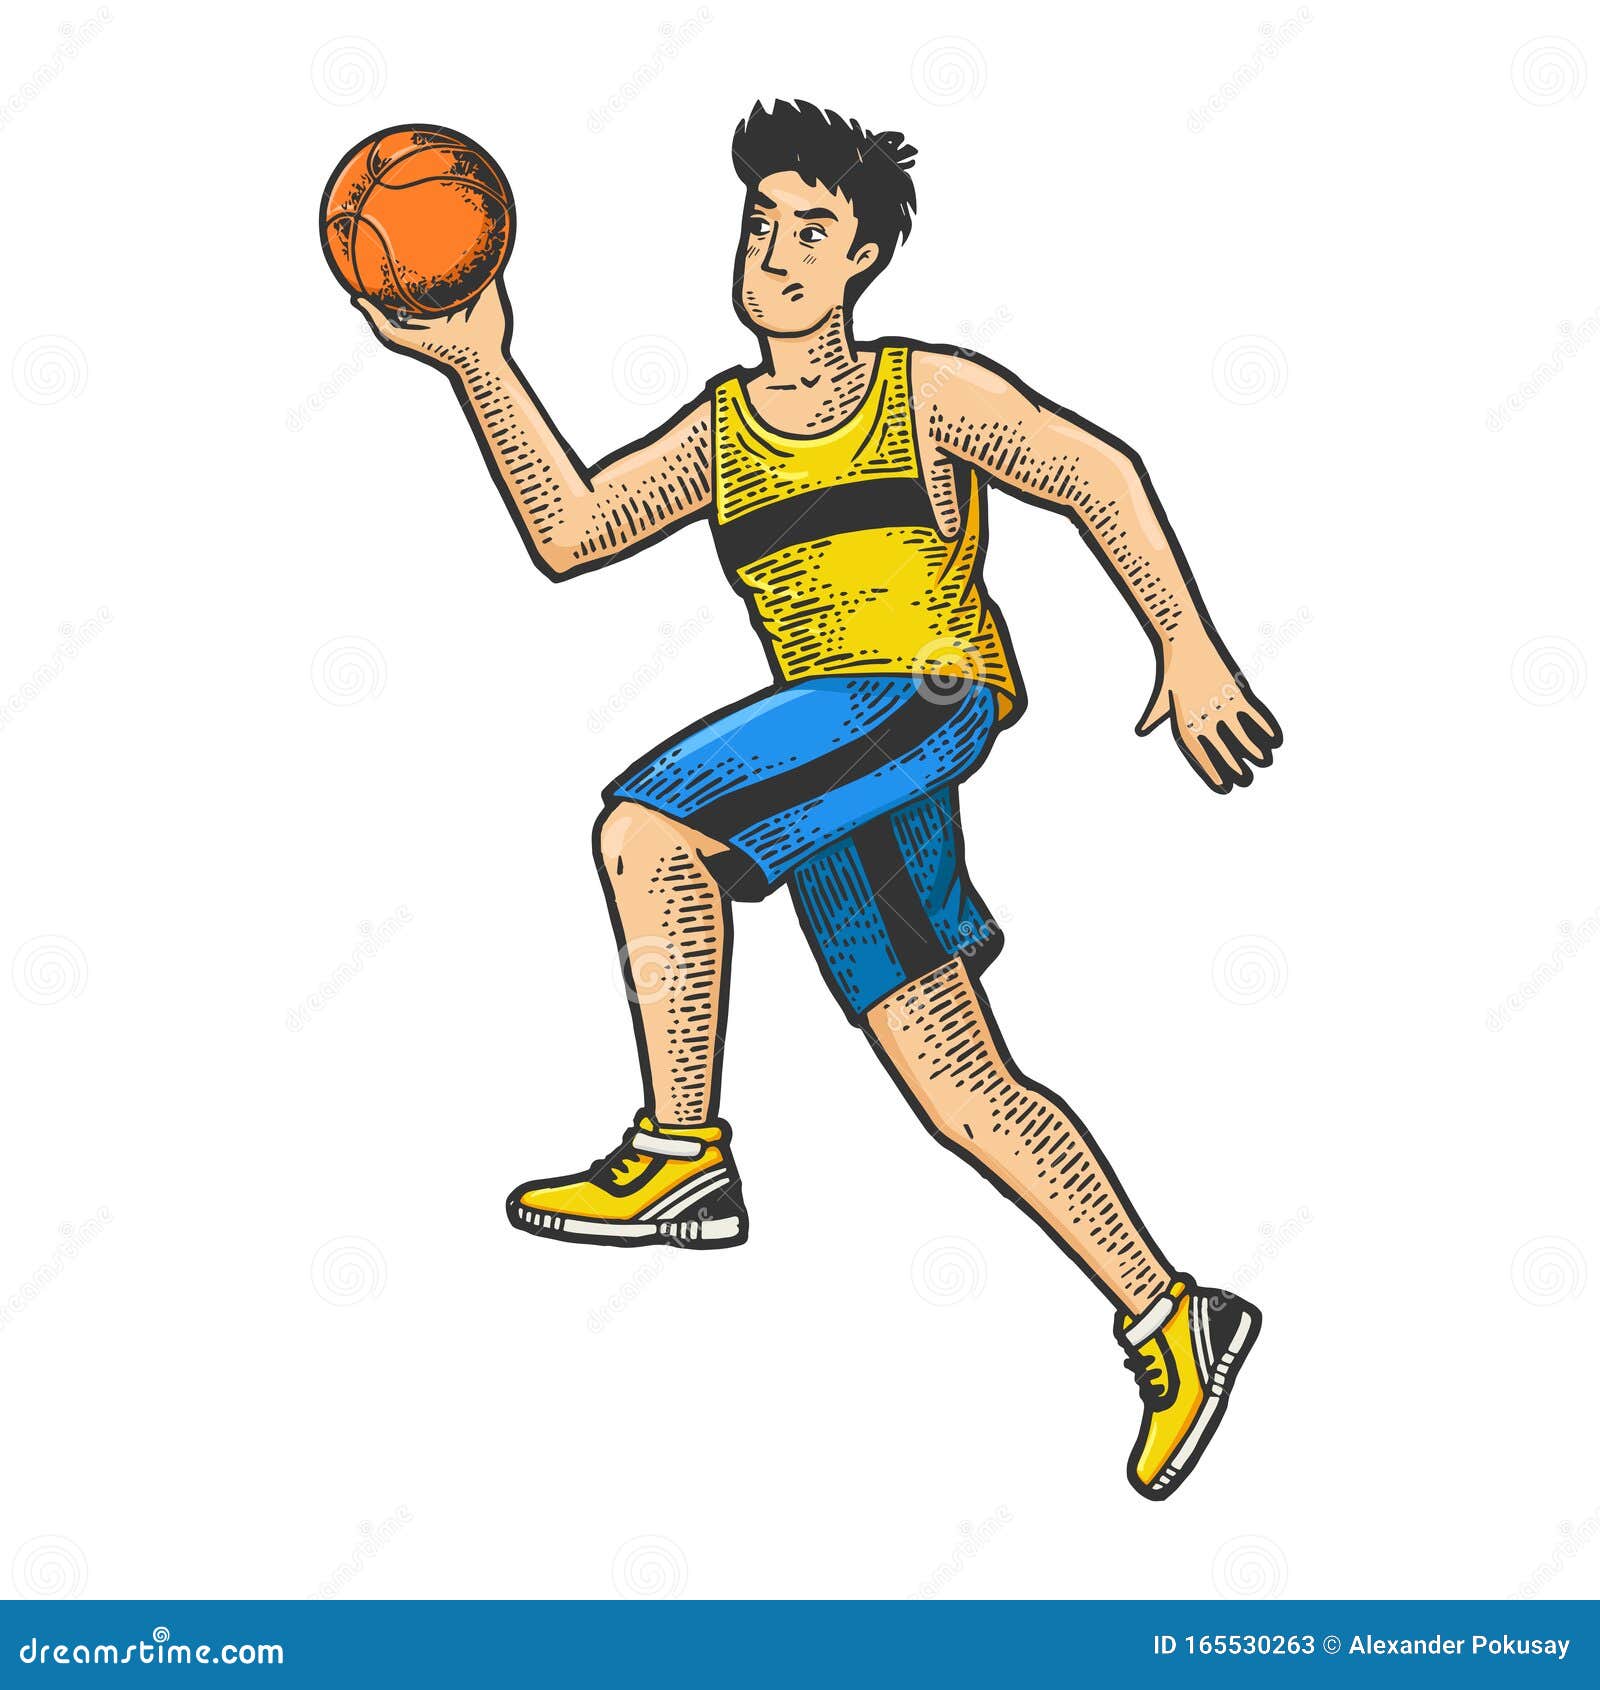 Basketball Player Sketch by aoiyoru on DeviantArt